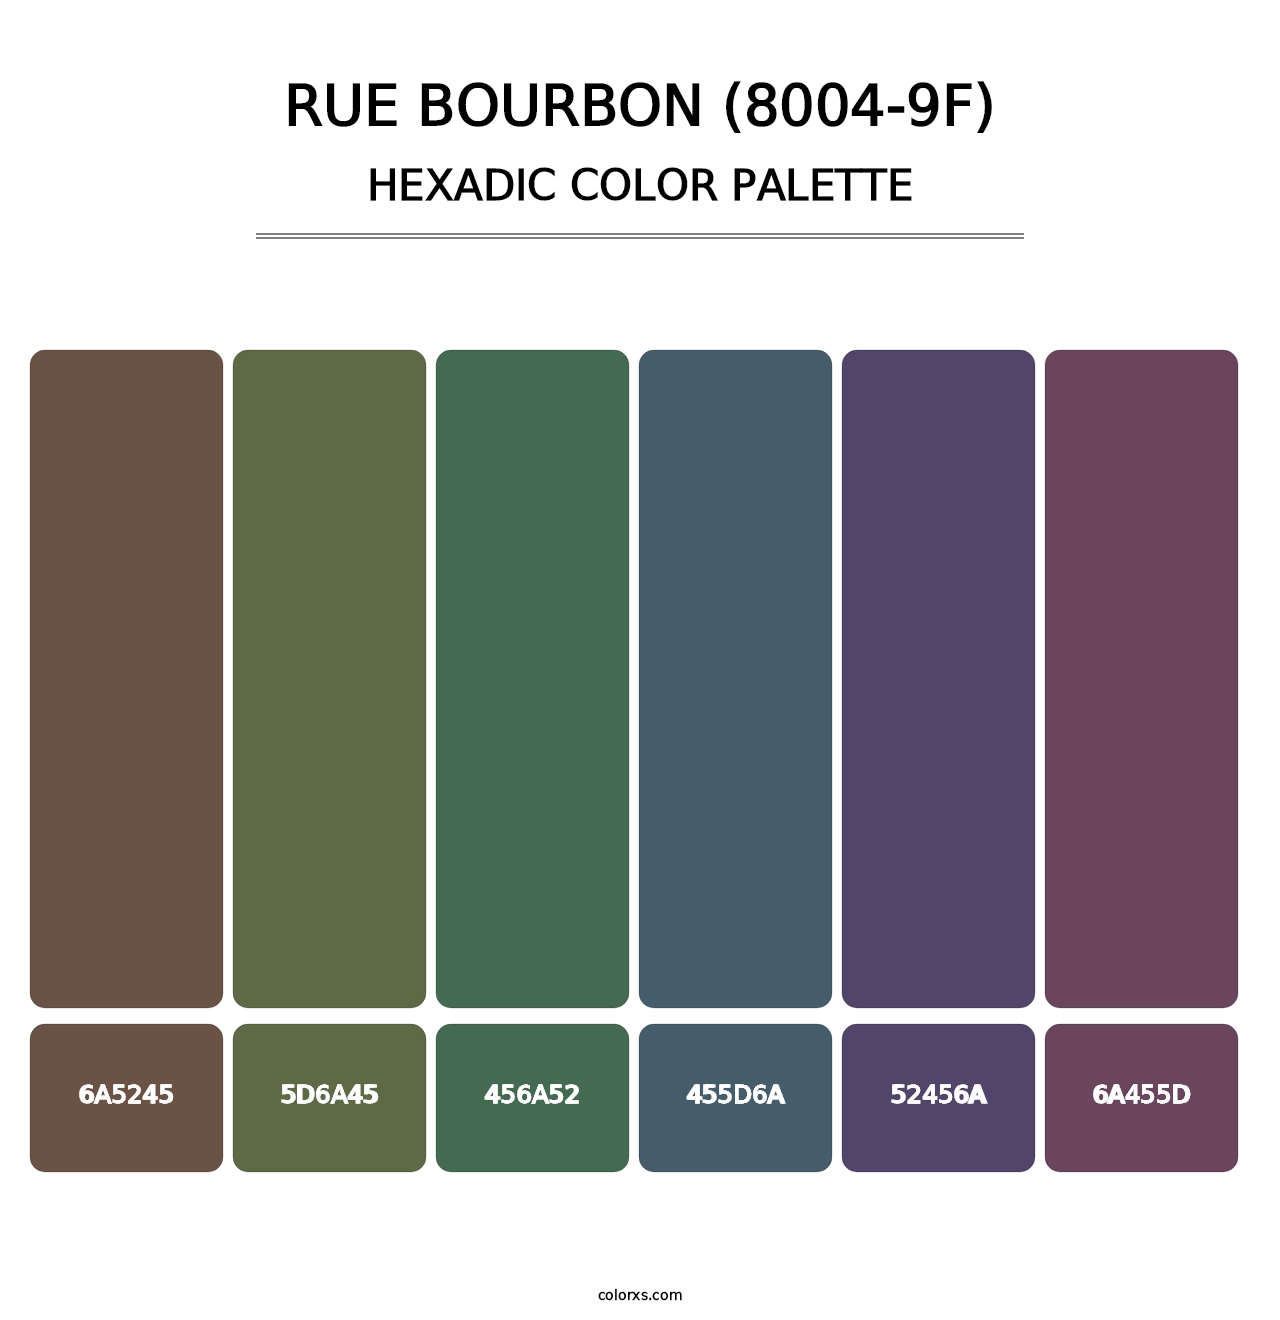 Rue Bourbon (8004-9F) - Hexadic Color Palette